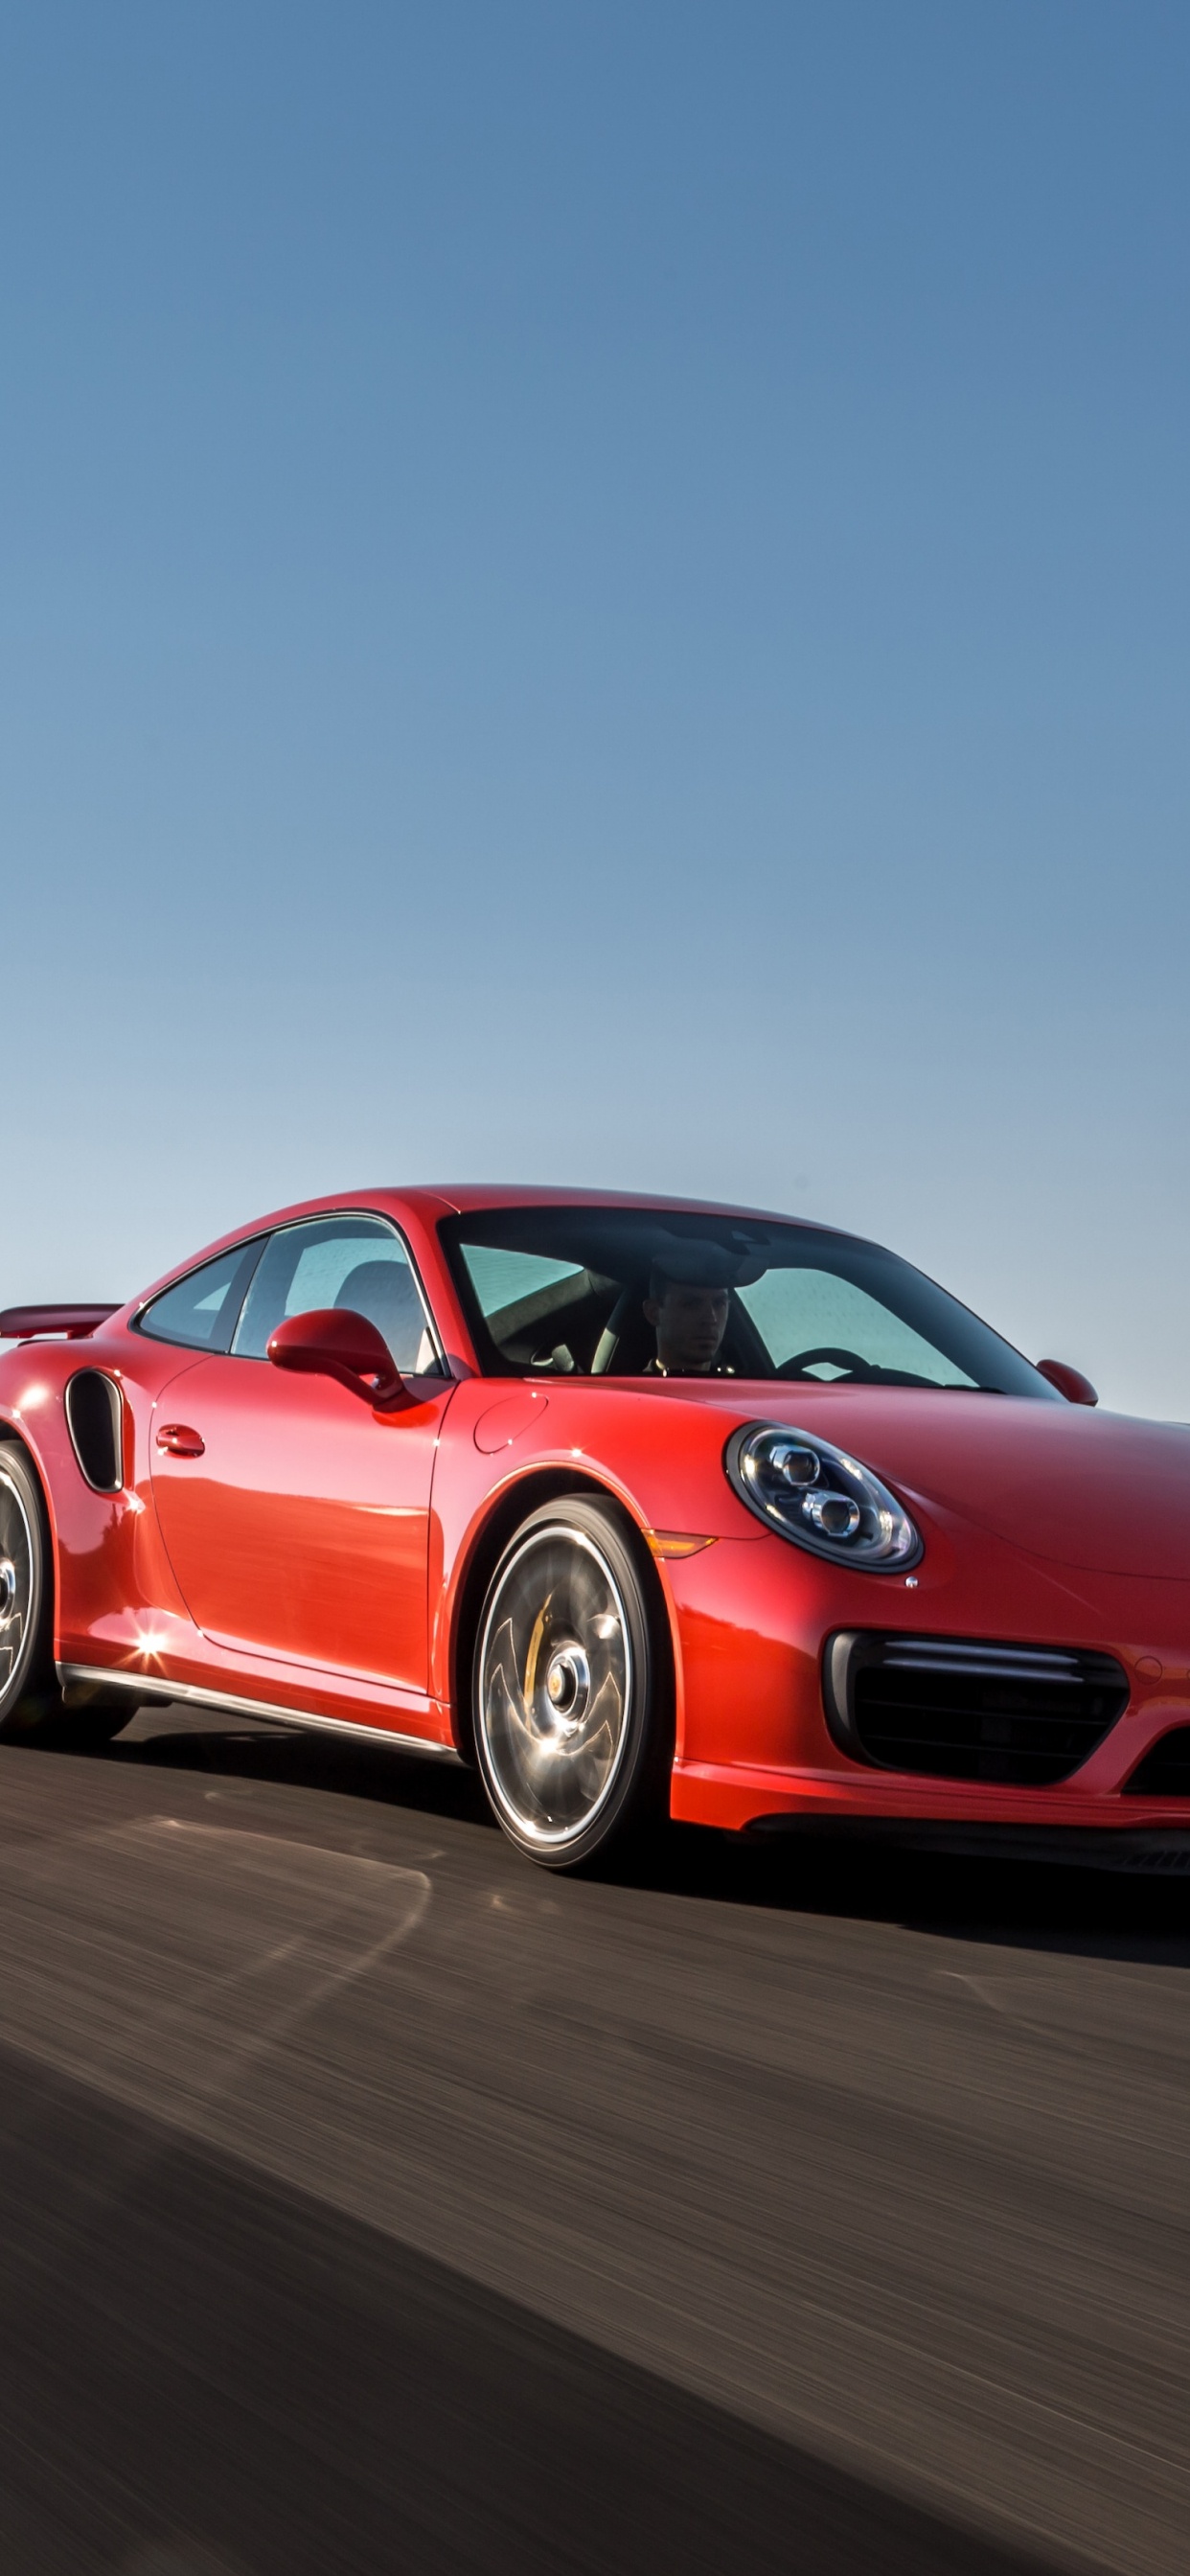 Red Porsche 911 on Road During Daytime. Wallpaper in 1242x2688 Resolution